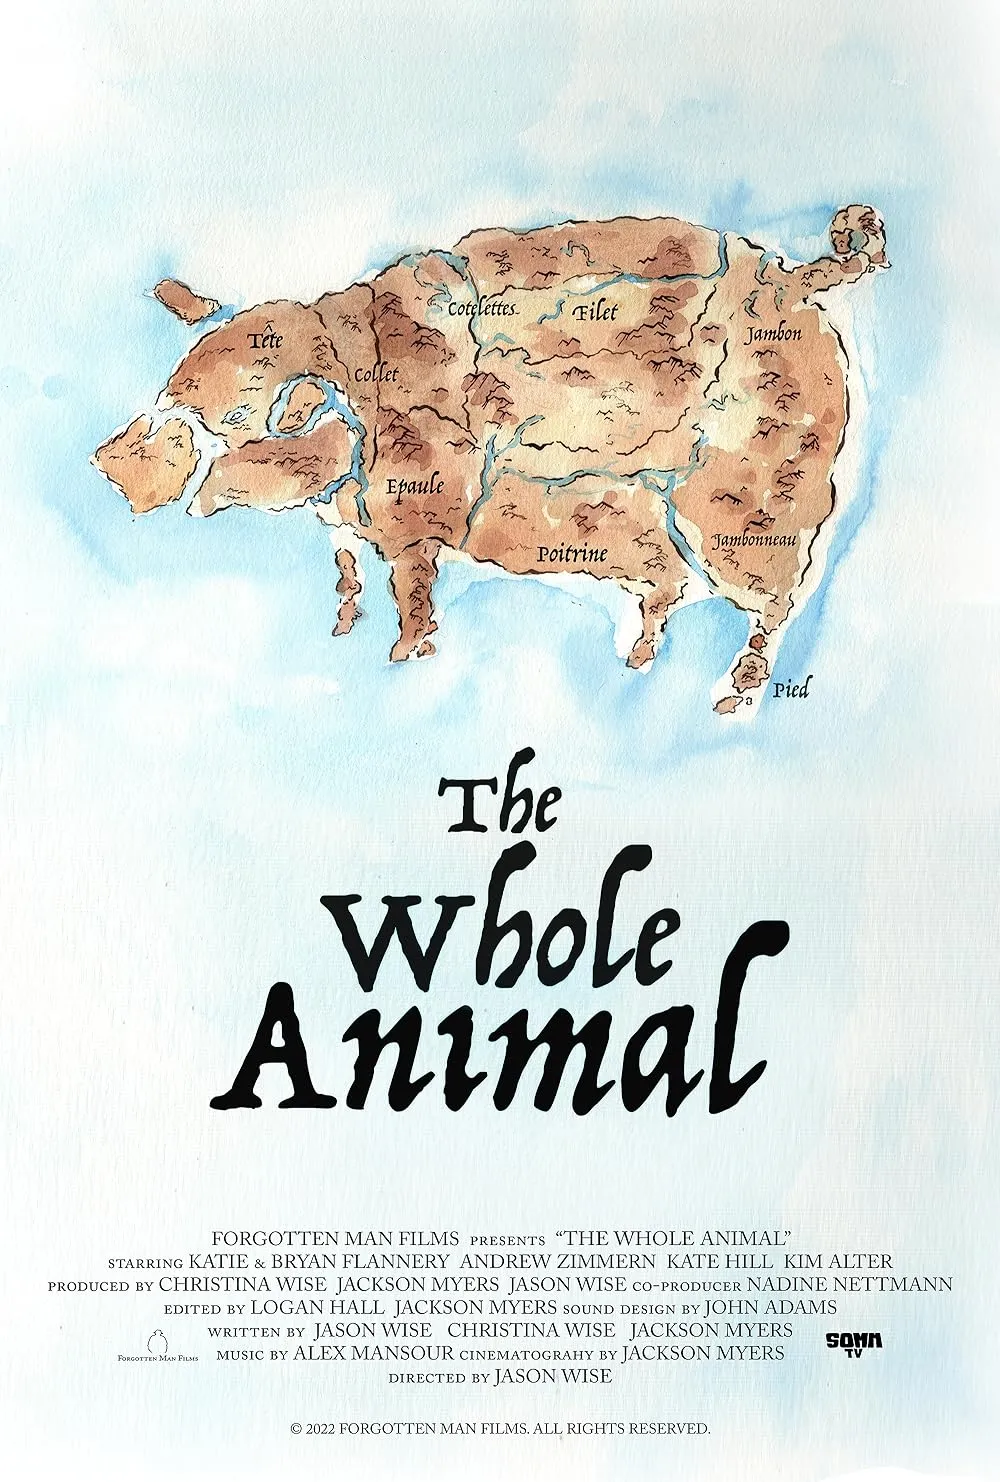     The Whole Animal